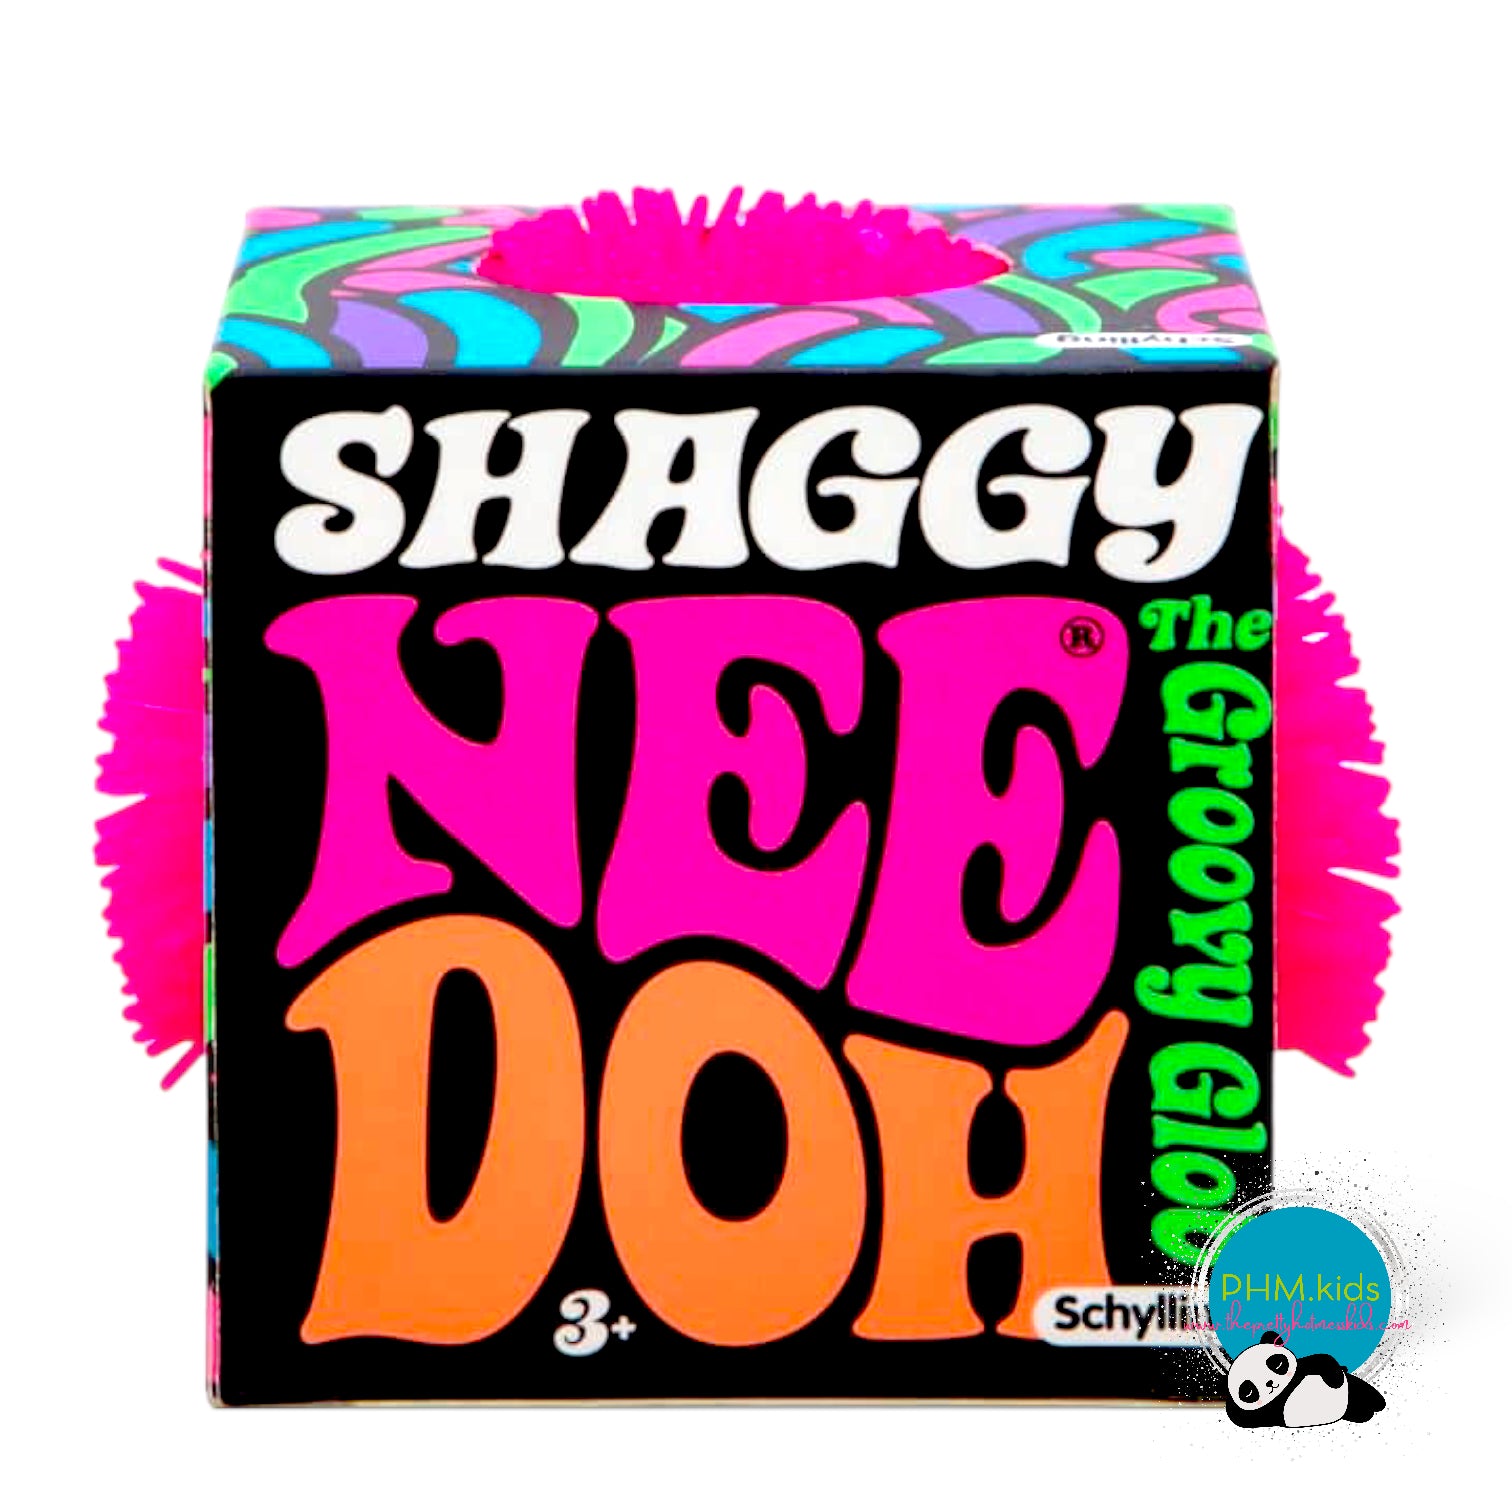 Shaggy NeeDoh